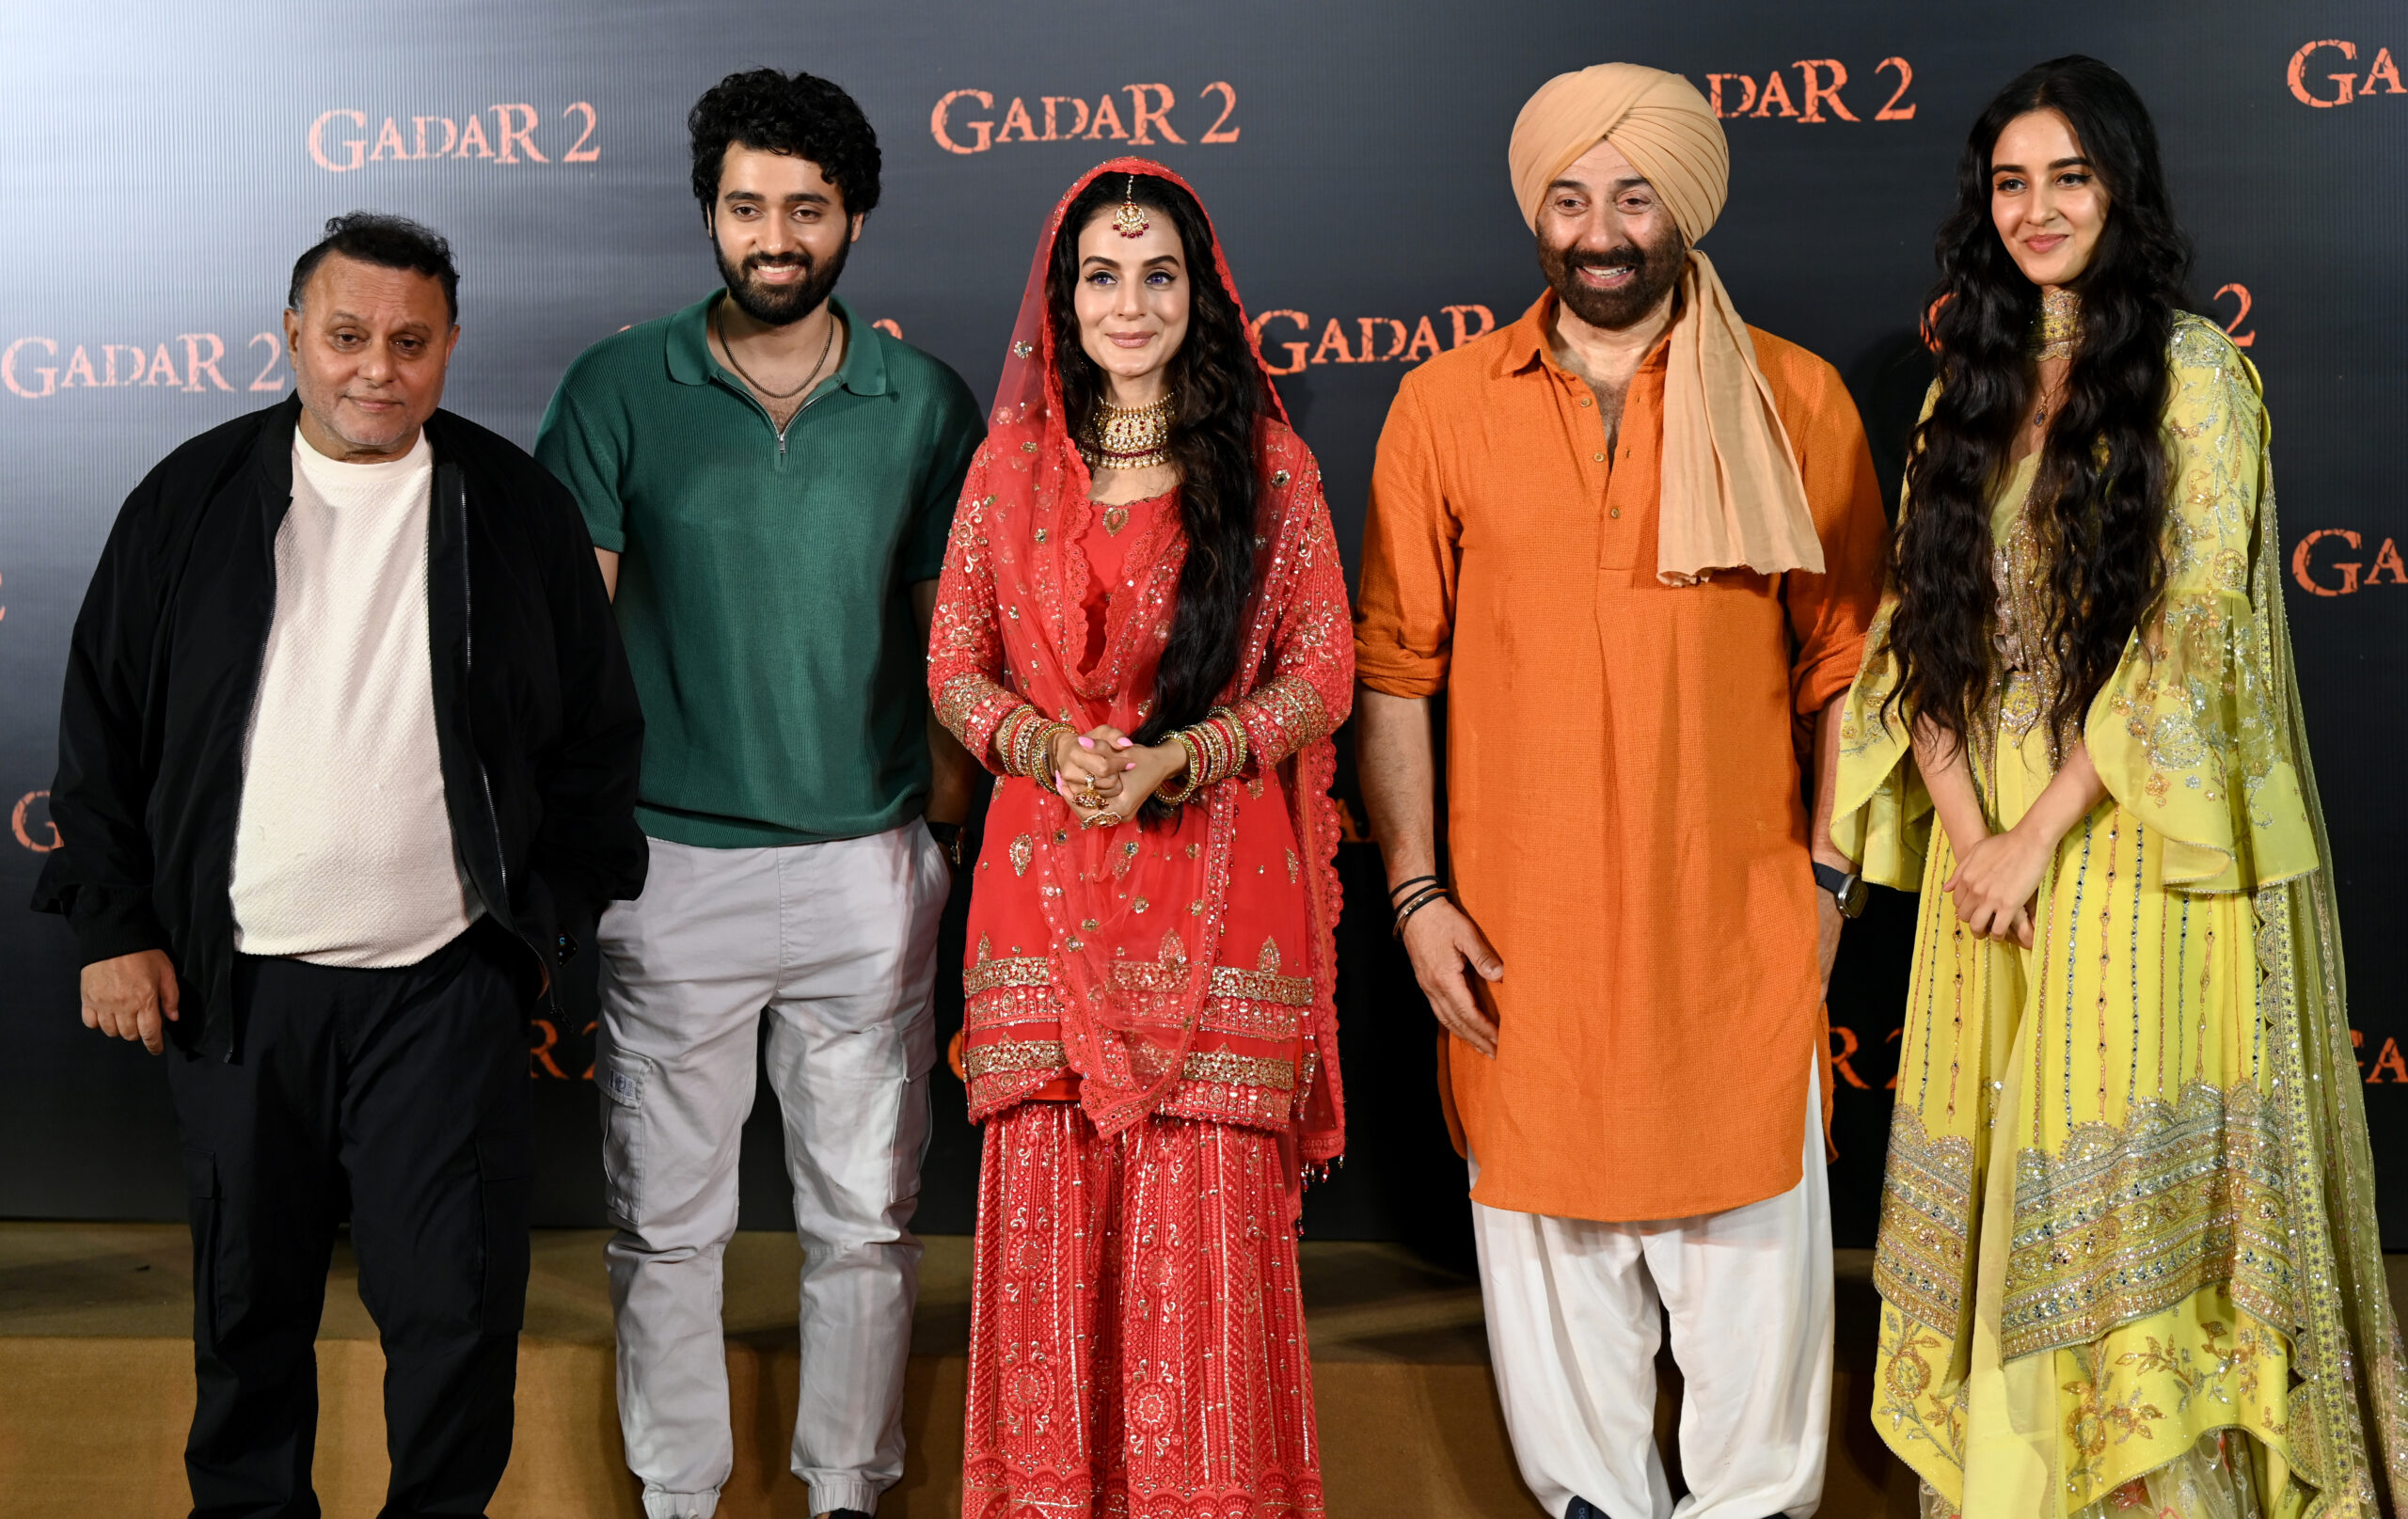 Sunny Deol had tears in his eyes, says Gadar 2 director Anil Sharma